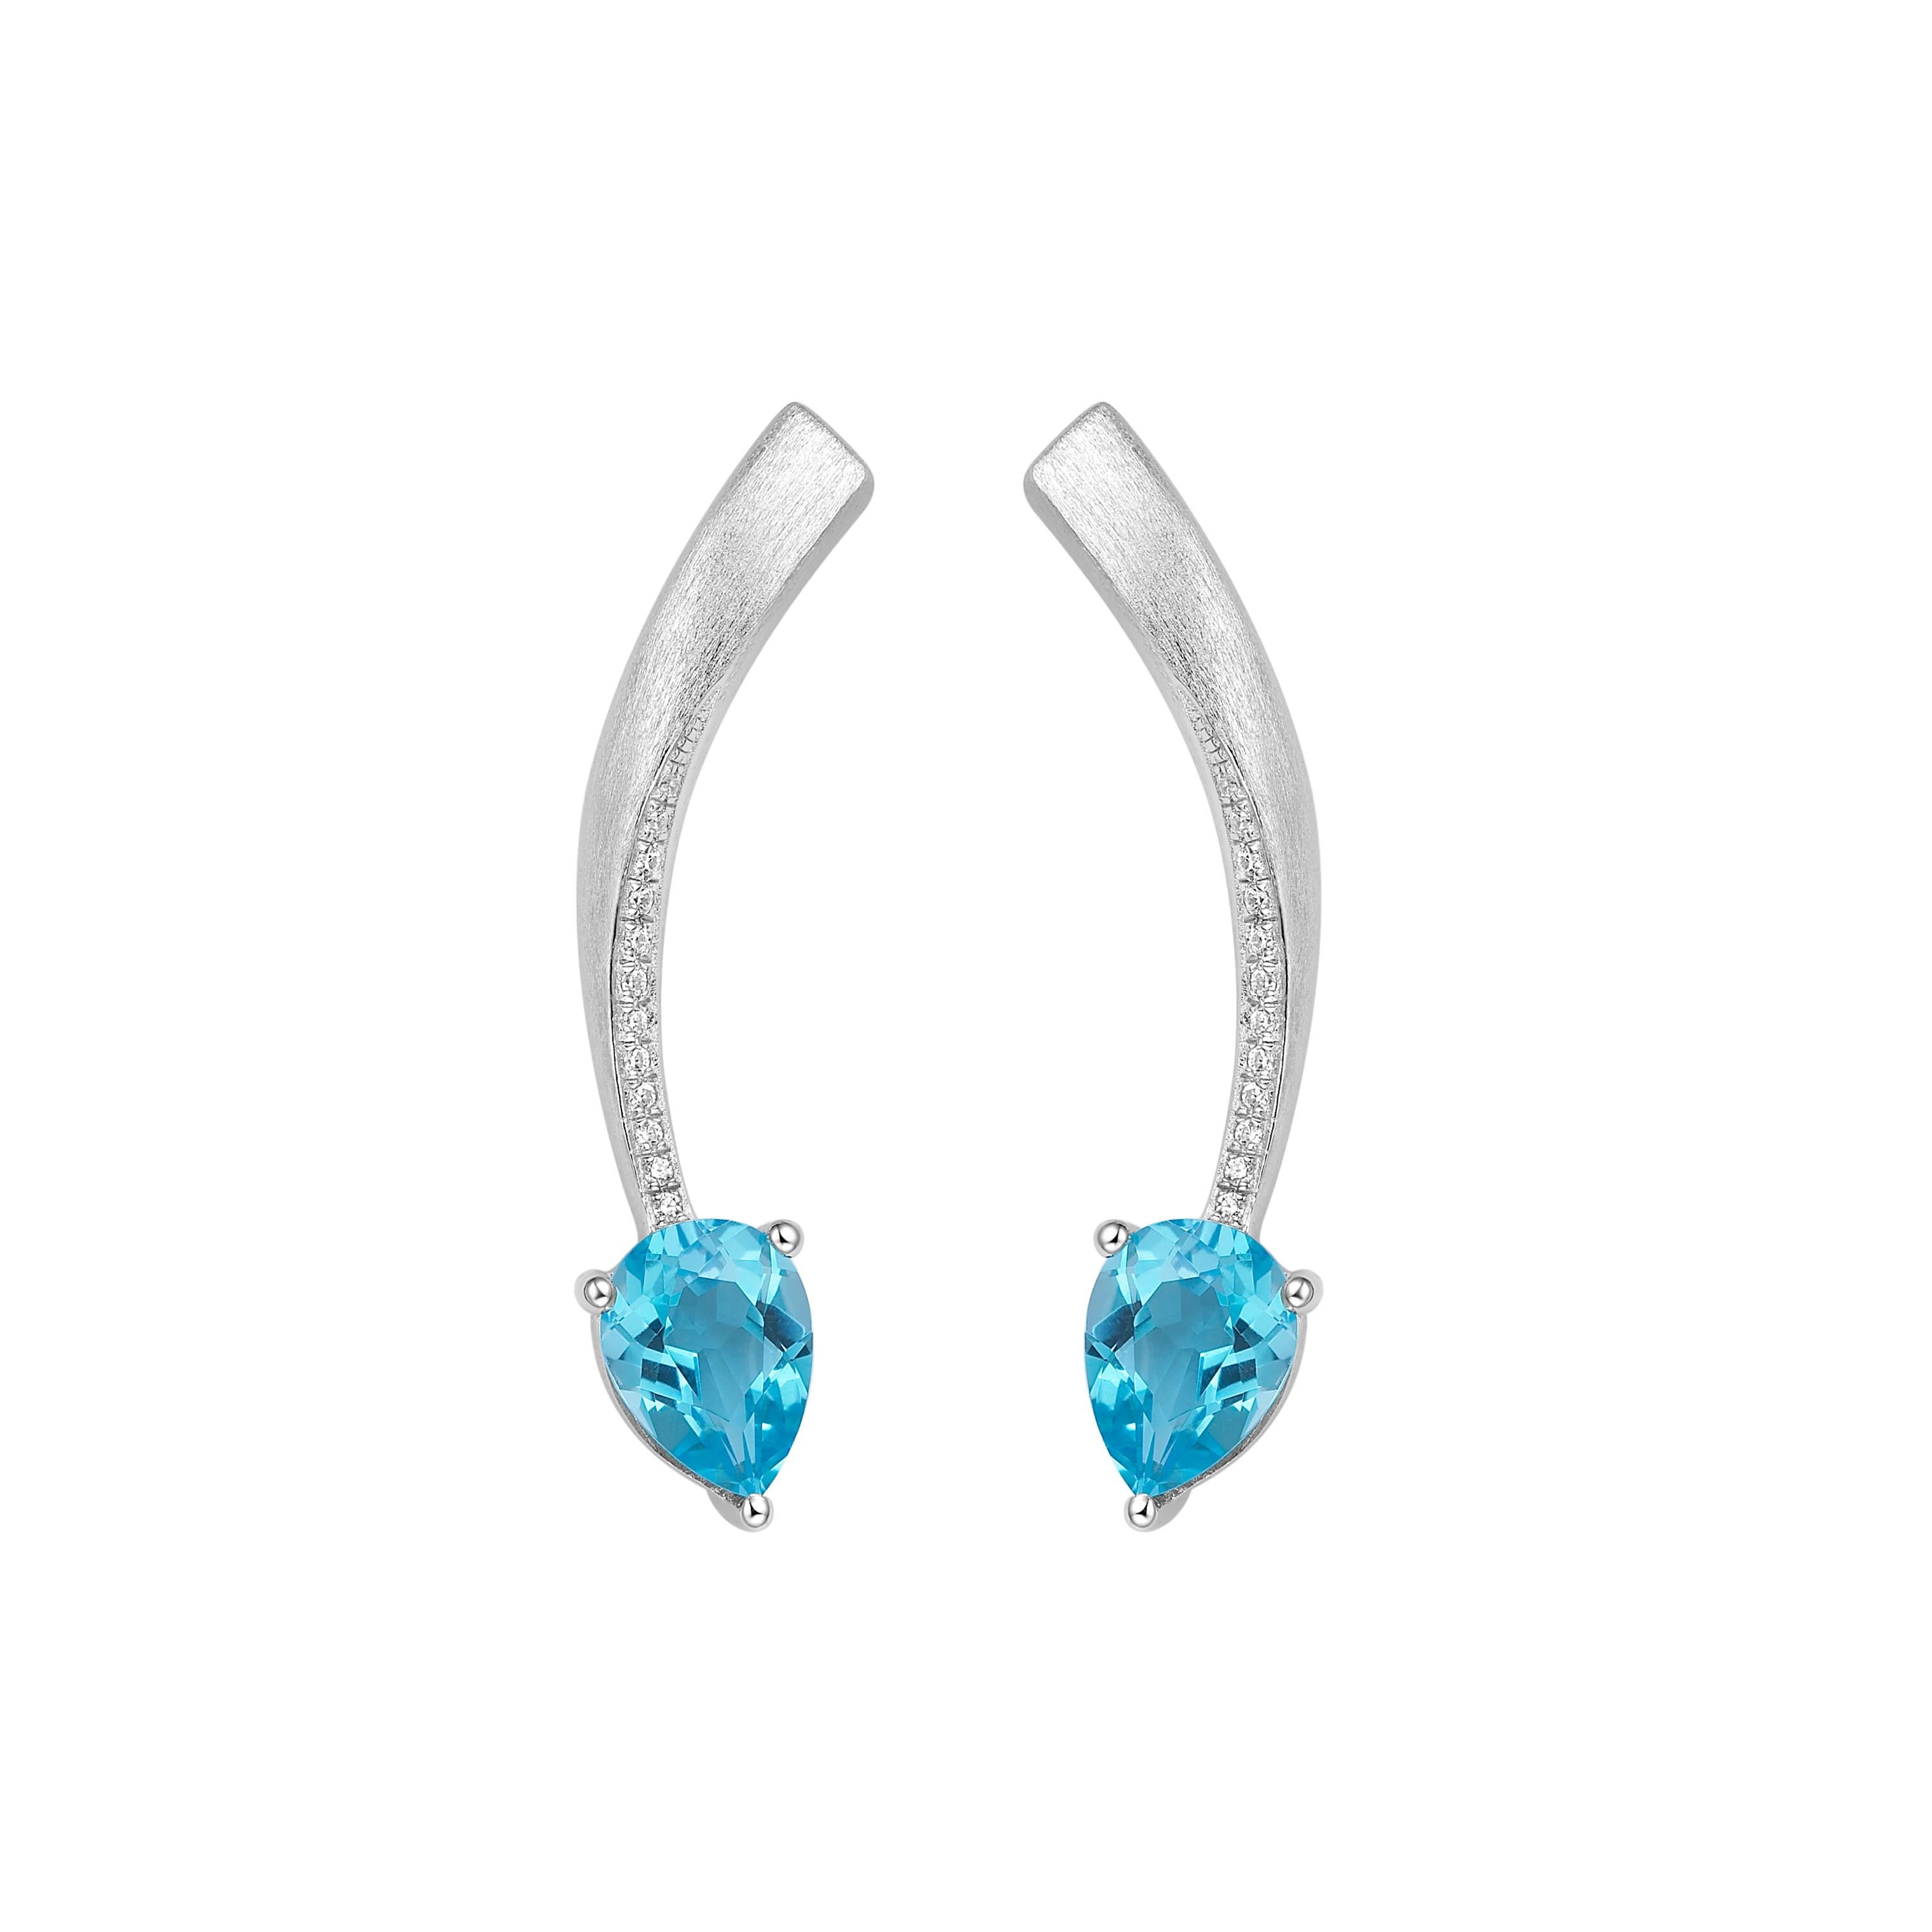 Contemporary Fei Liu Blue Topaz Cubic Zirconia Sterling Silver Two-Piece Drop Earrings